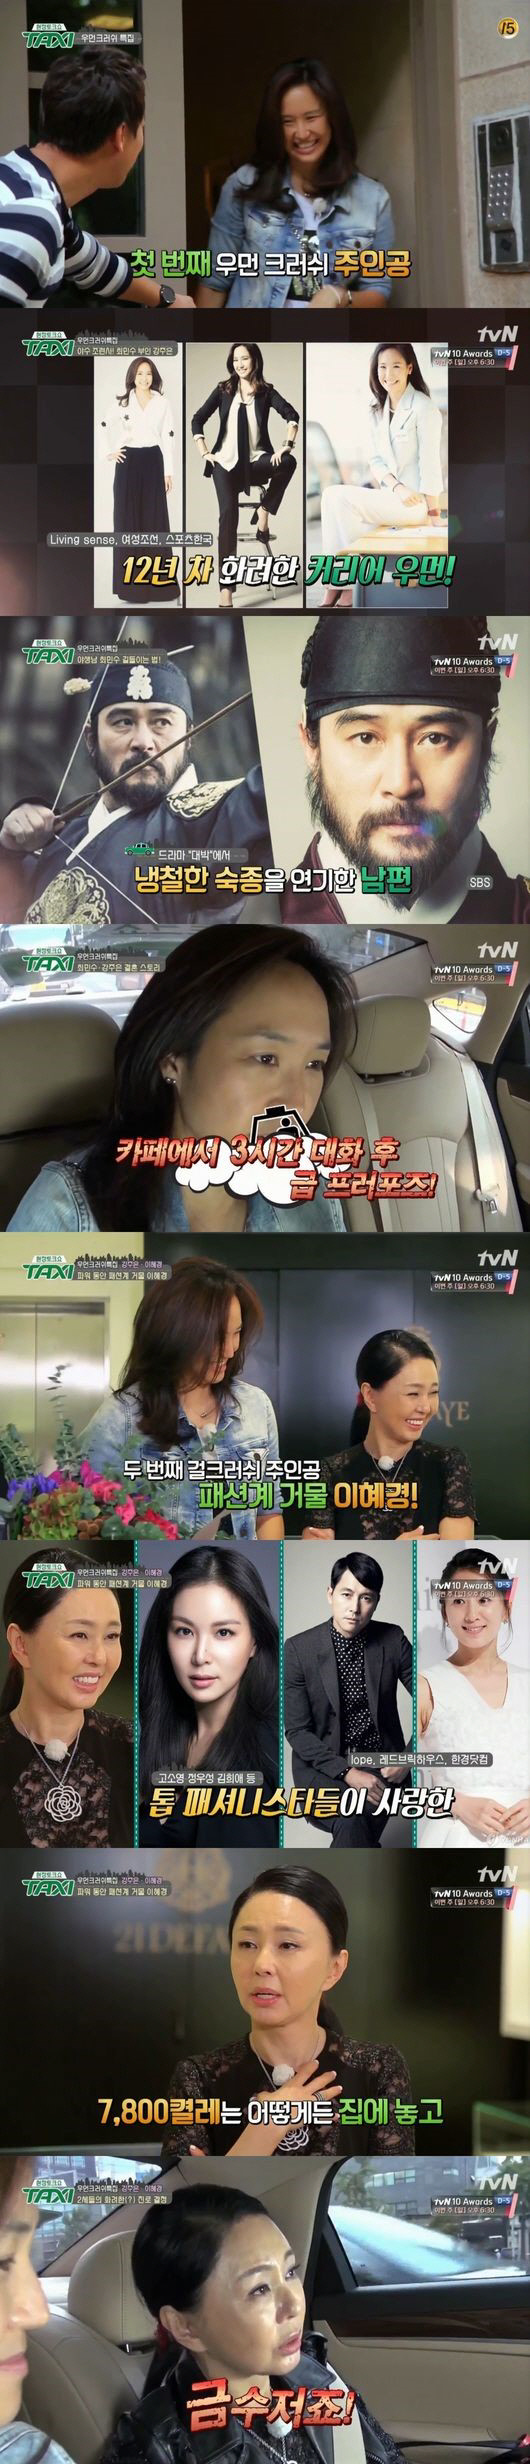 tvN ‘택시’ 방송 화면 갈무리